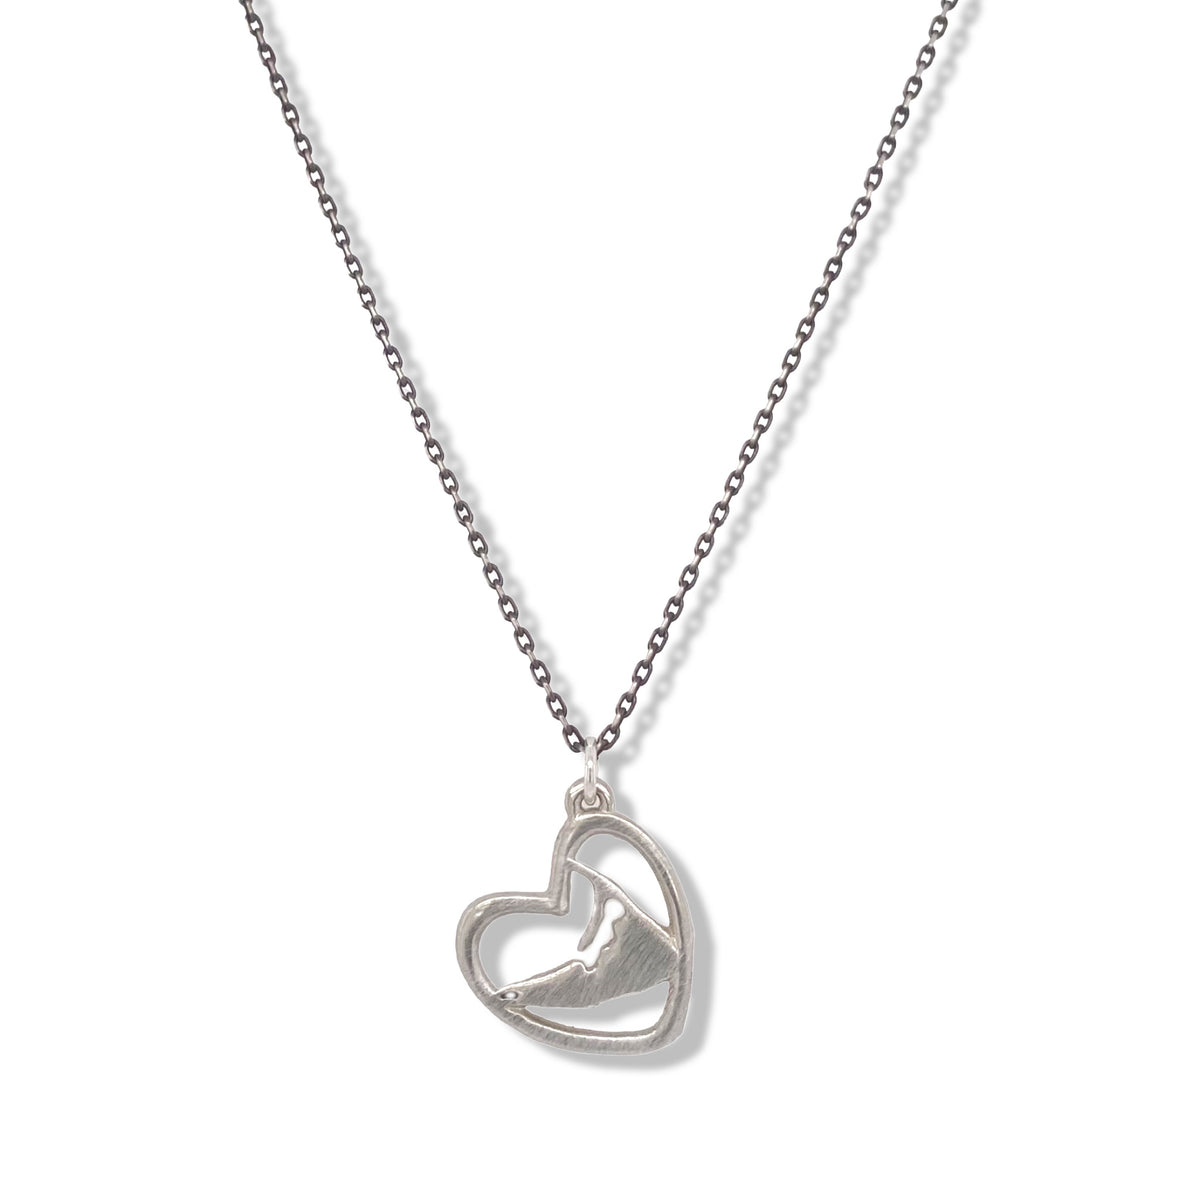 Sconset Nantucket Heart Necklace in Silver | KSD Jewelry